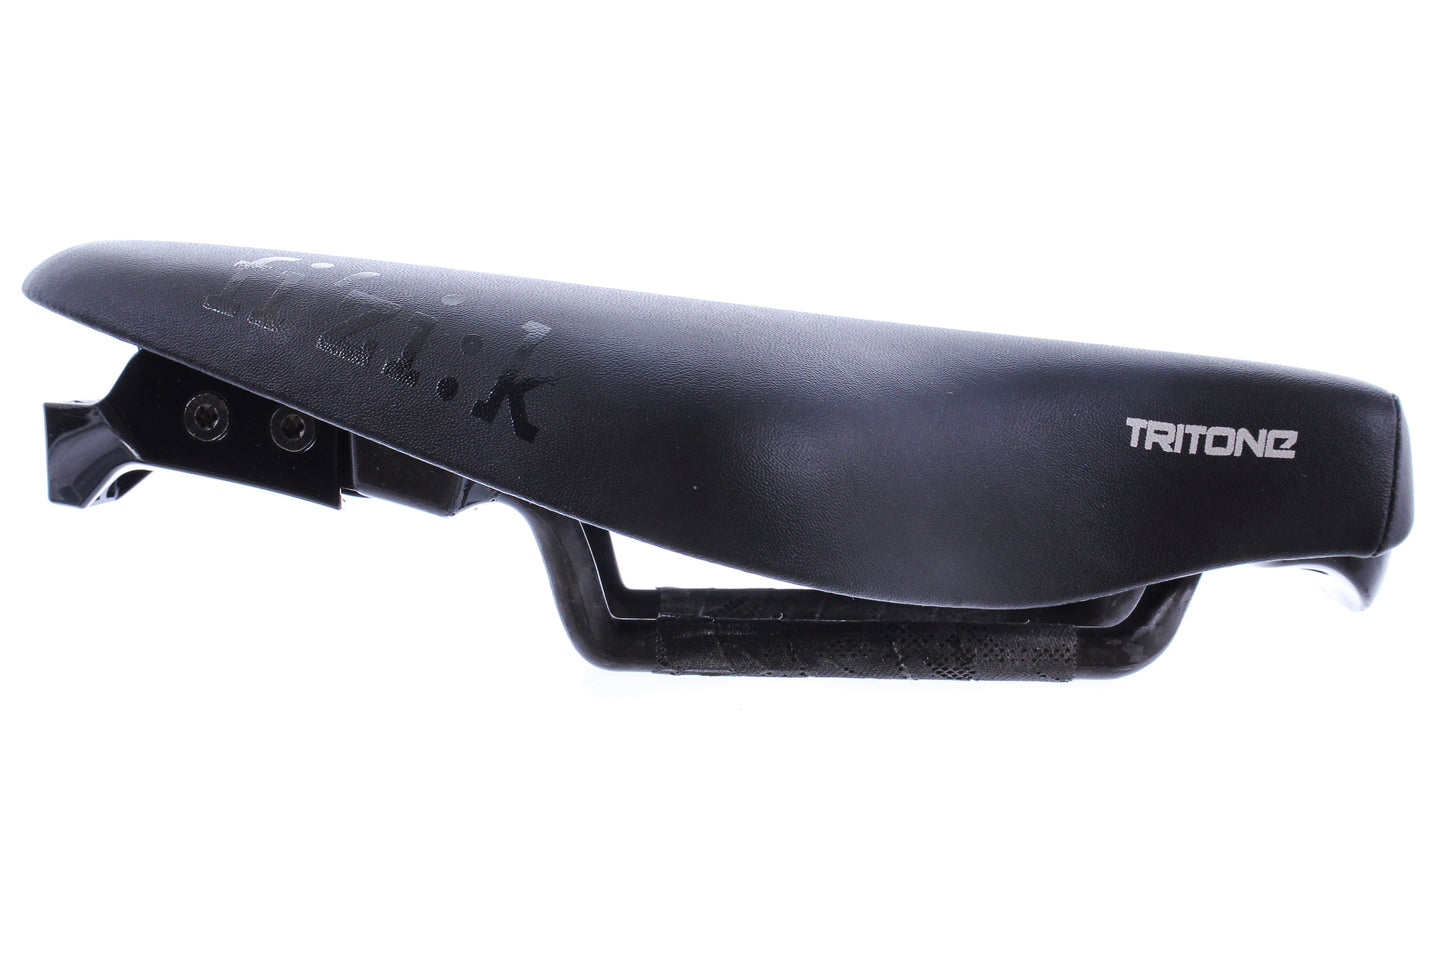 NEW Fizik Tritone Carbon Braided Rail Saddle + Carriage Kit 235g Tri TT Road